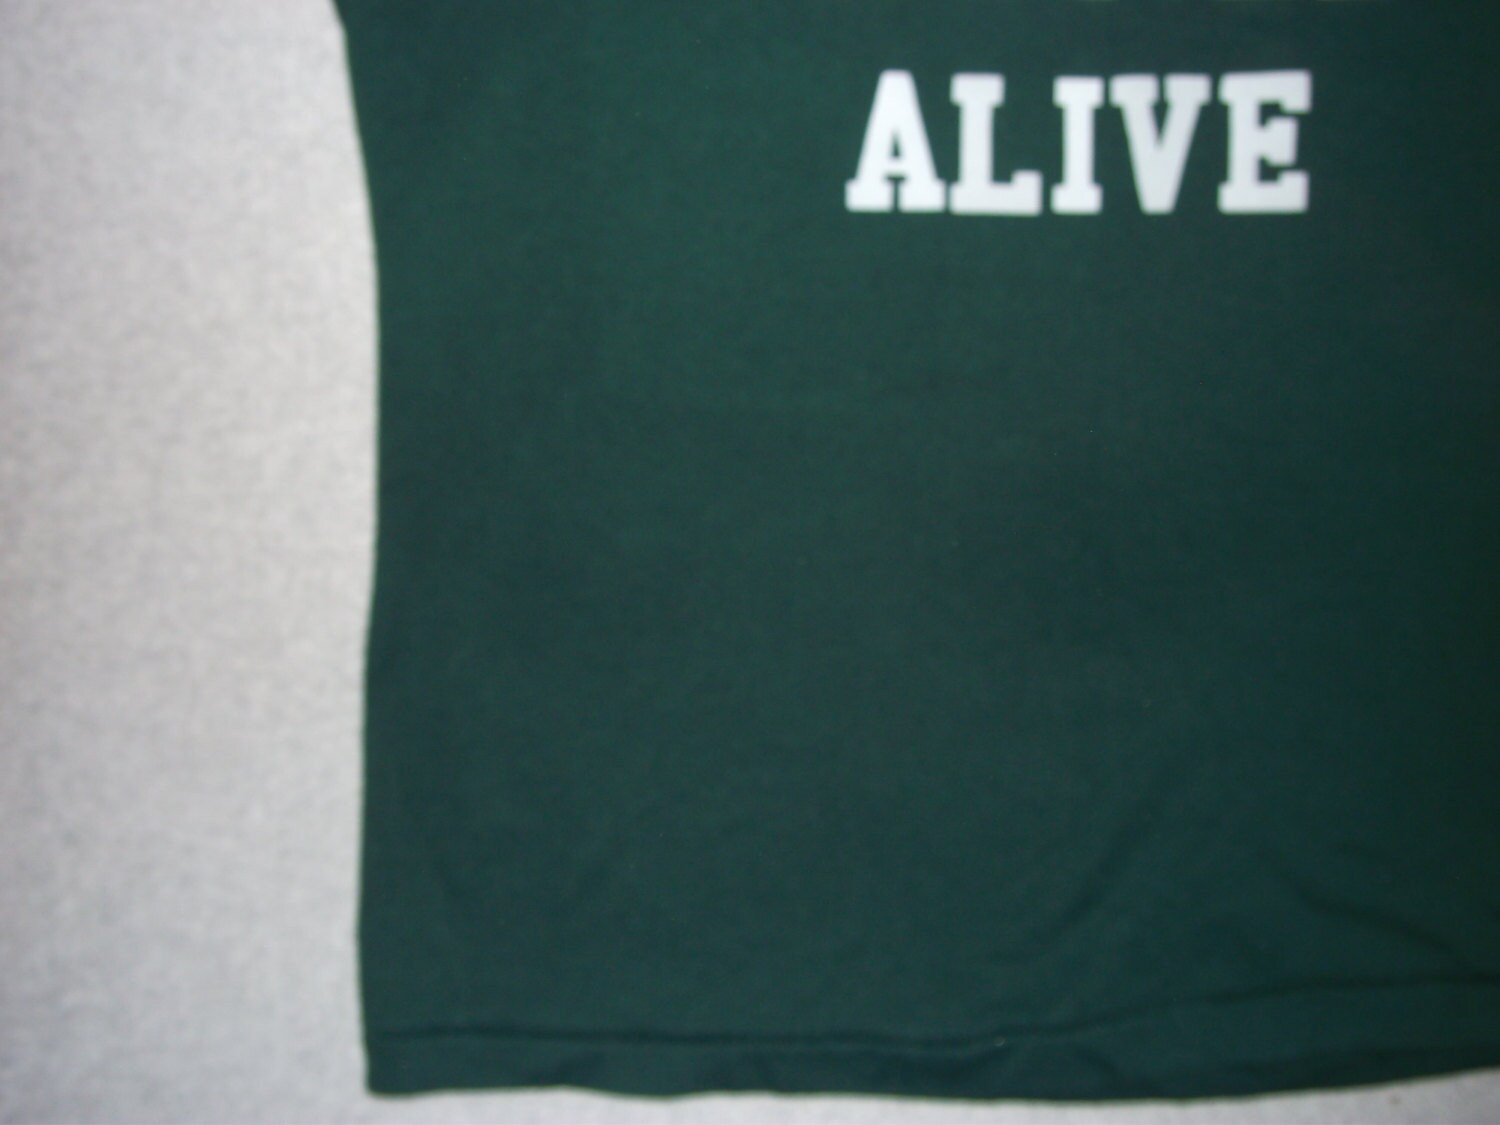 Vintage 80s Best Dark Green T-Shirt 55 and Still Alive | Etsy